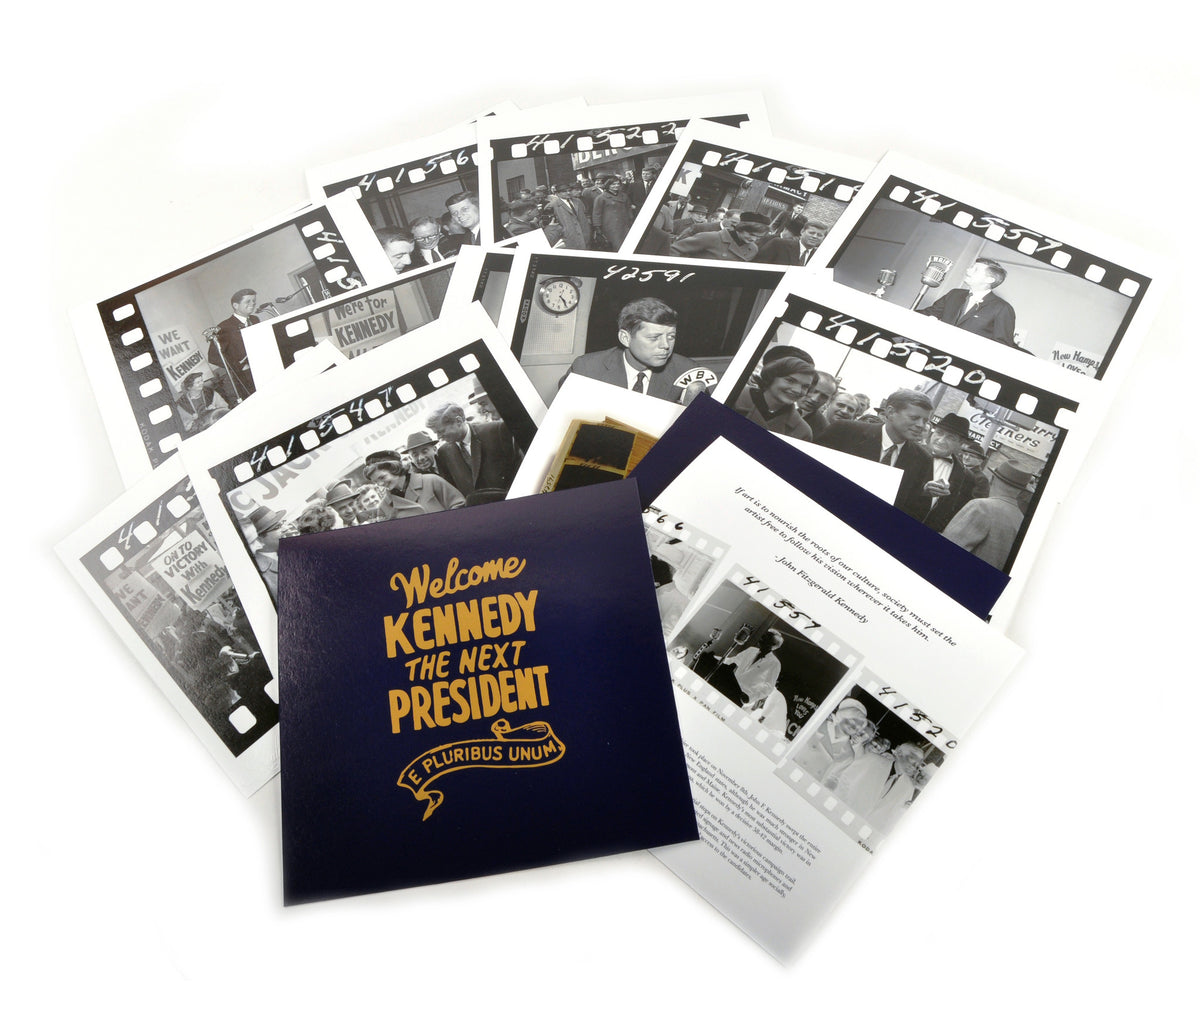 John F. Kennedy Photograph Folio Set - 12 Limited Edition, Archival Prints